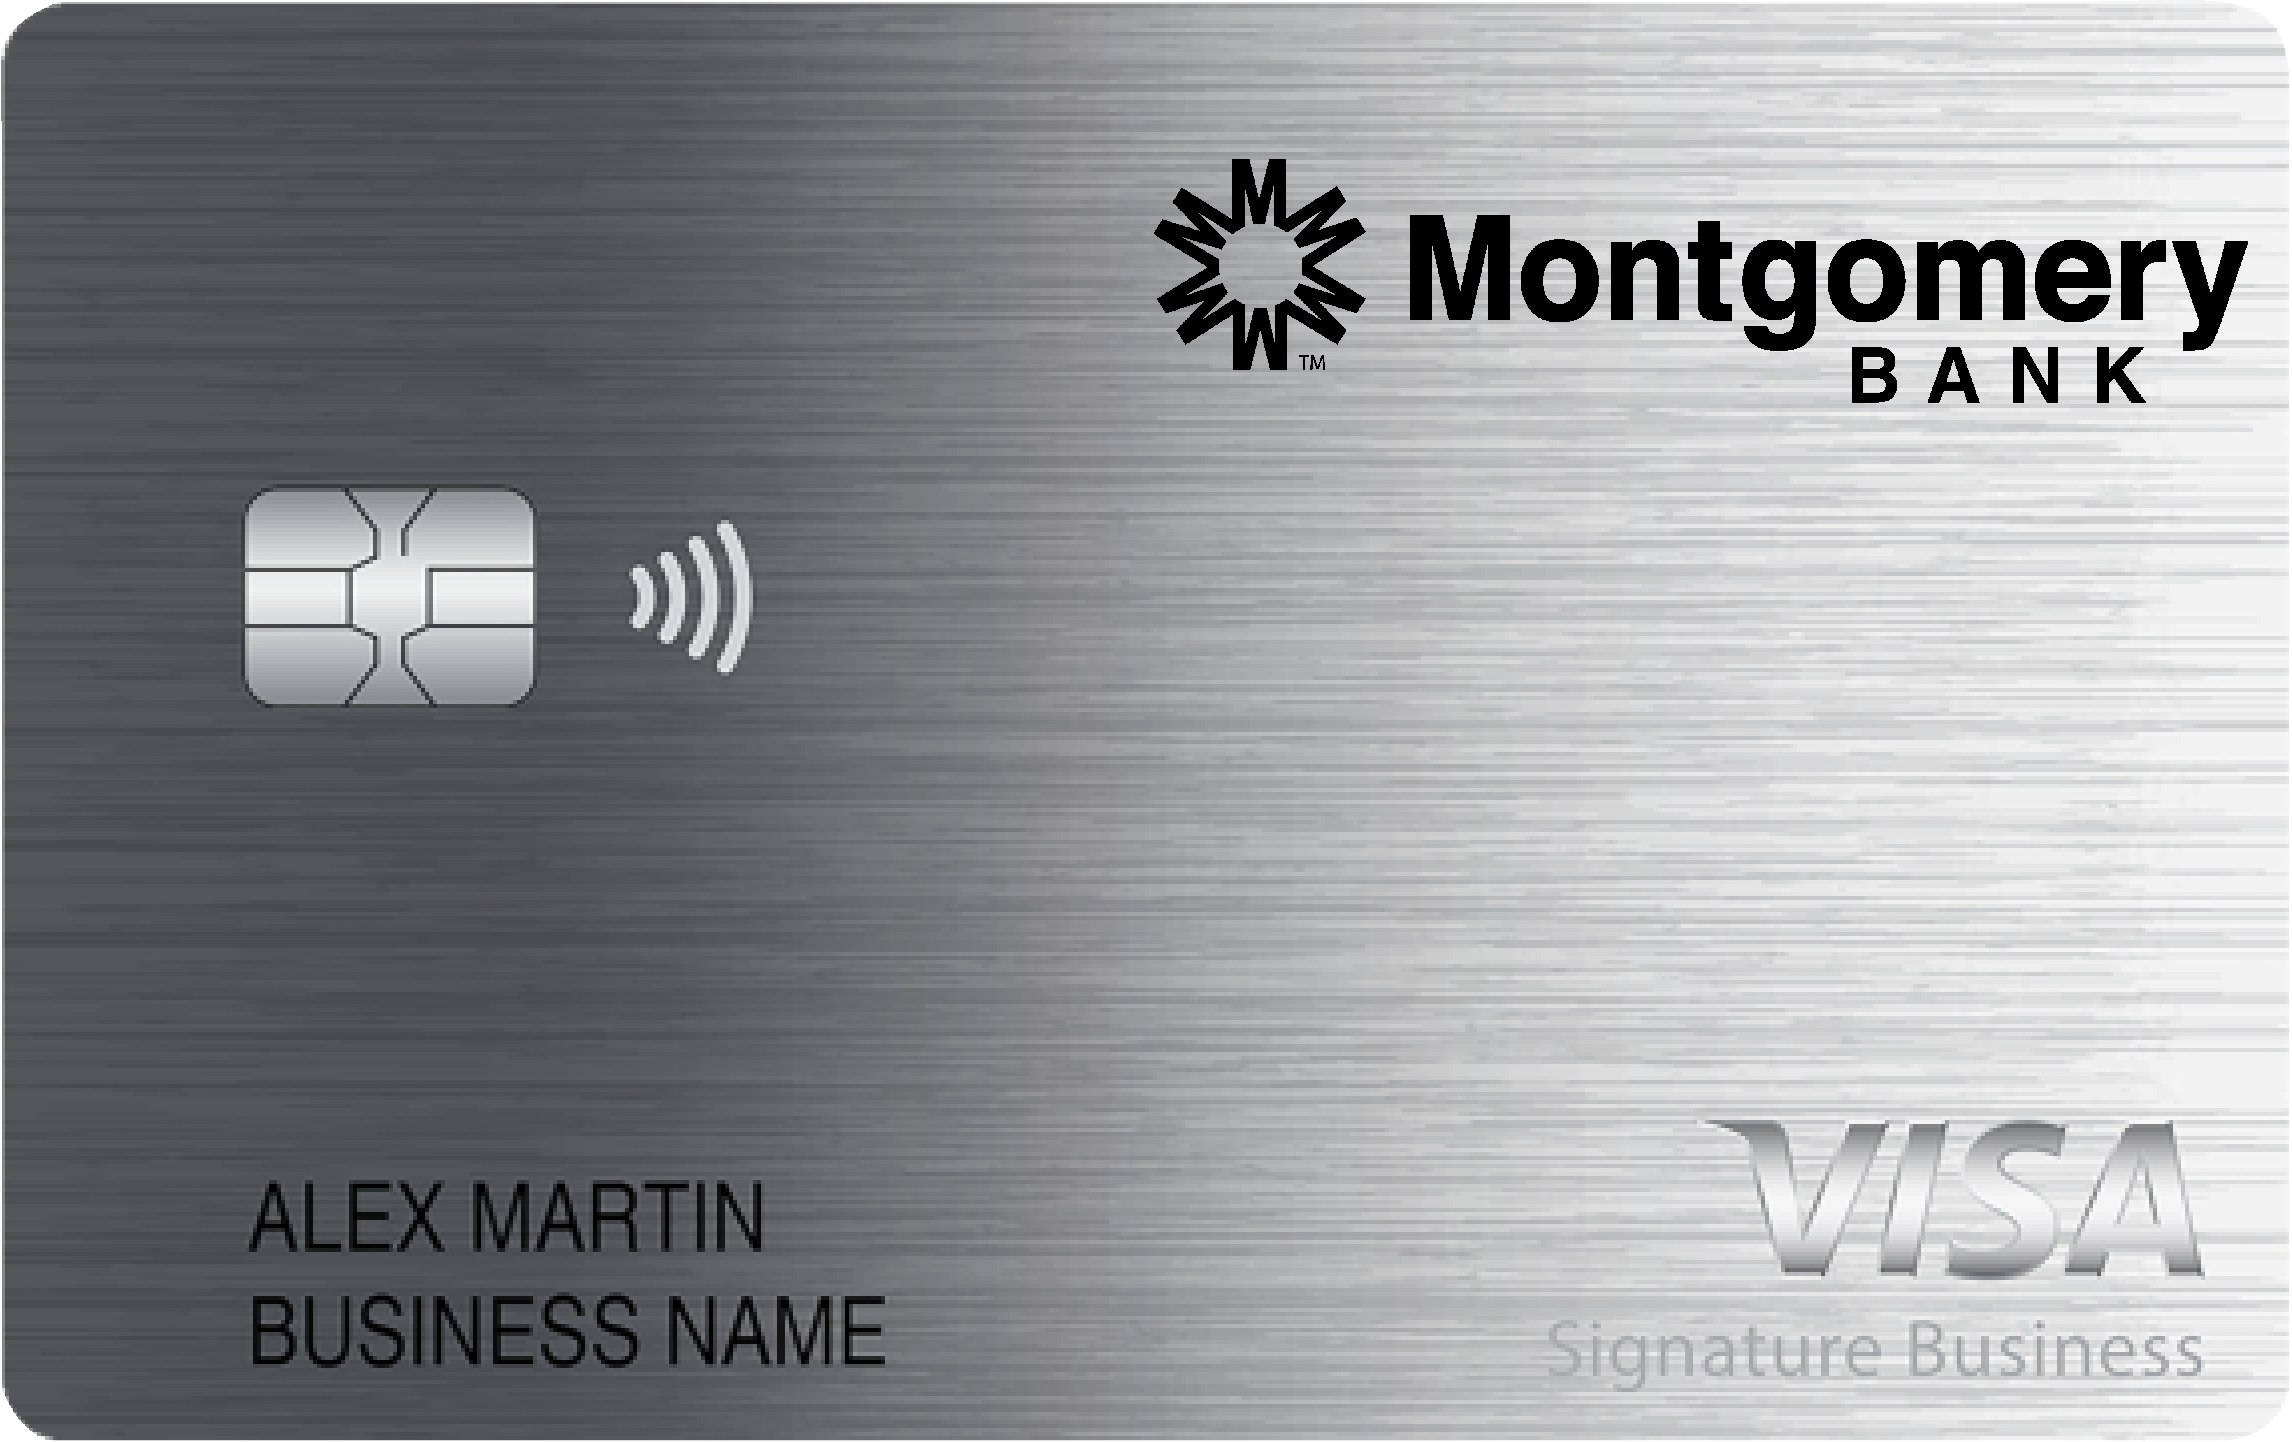 Montgomery Bank